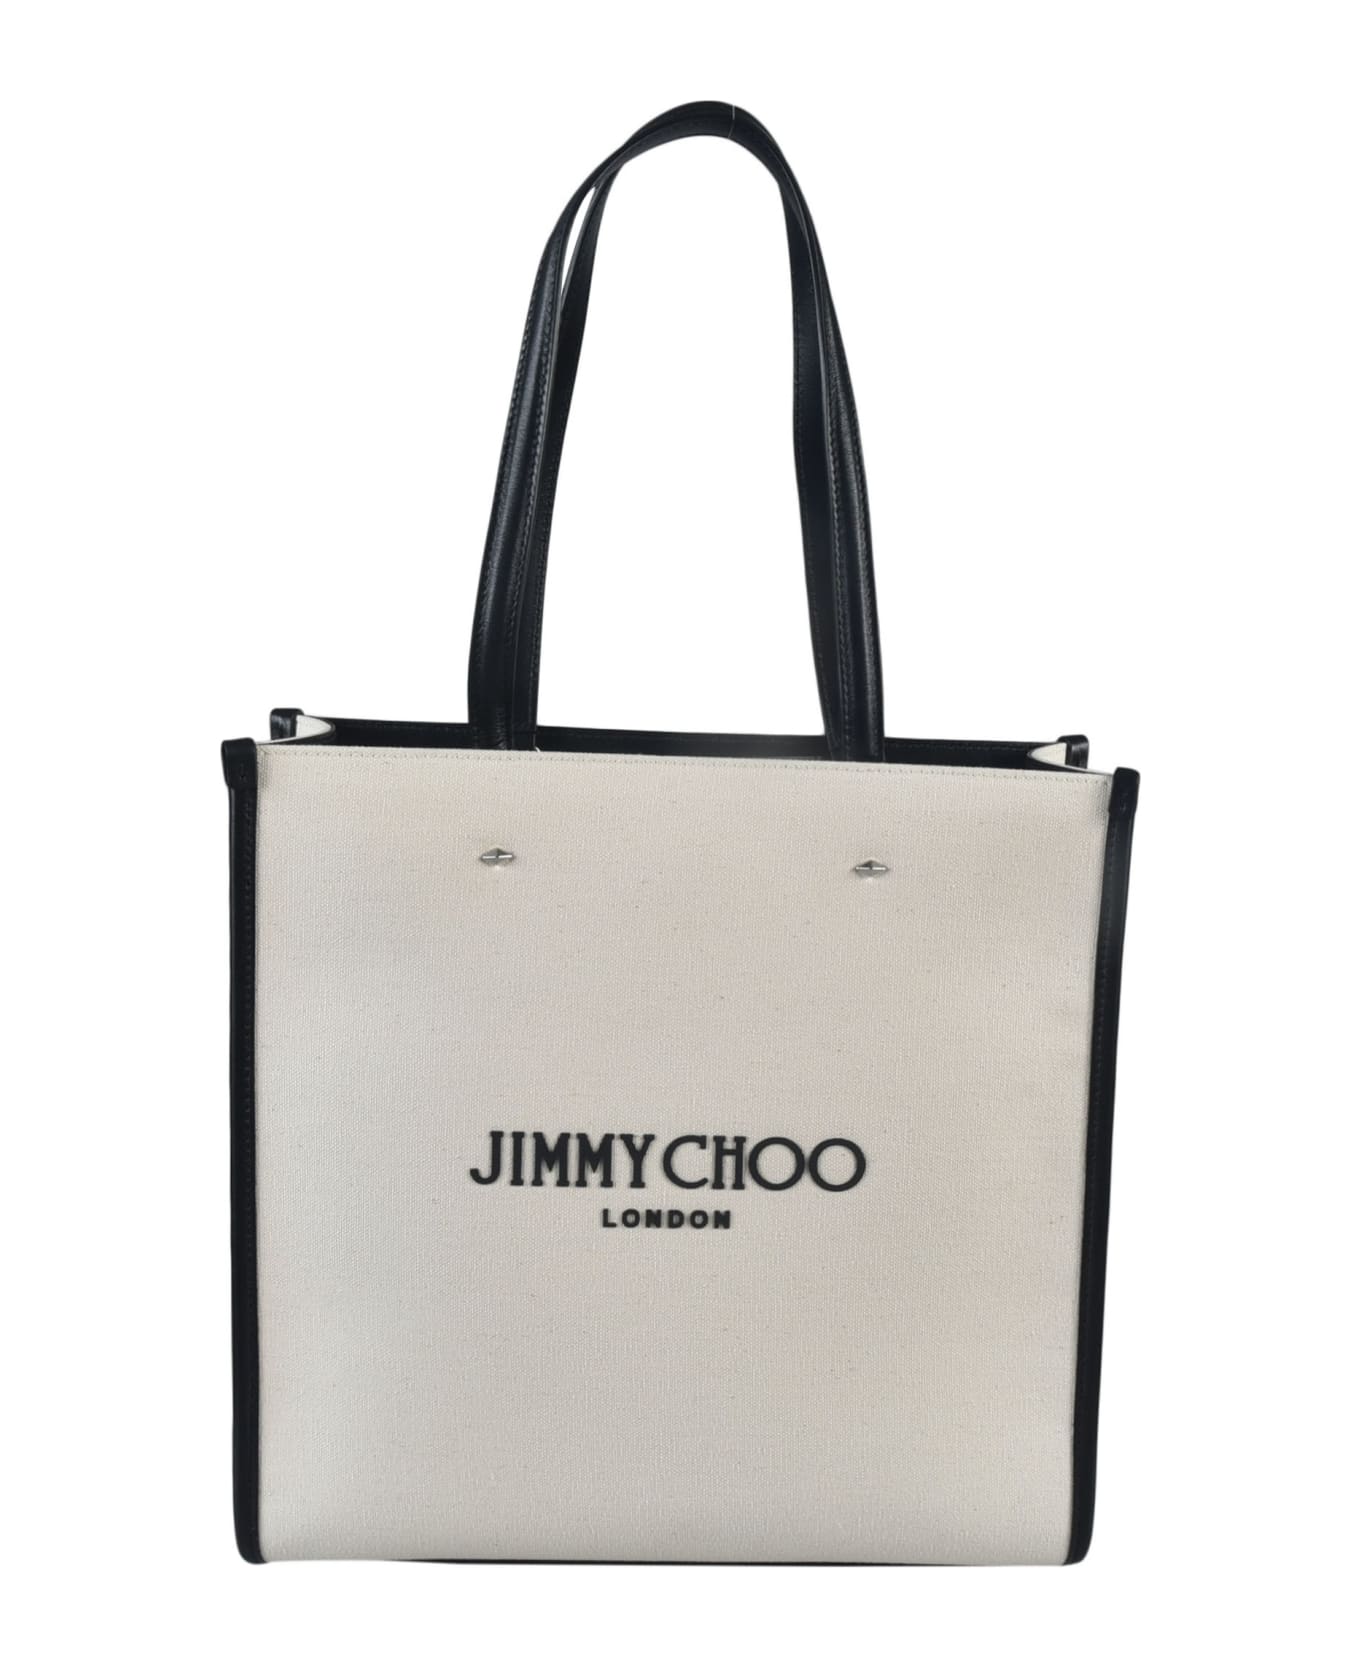 Jimmy Choo Logo Print Tote - Natural/Black/Silver